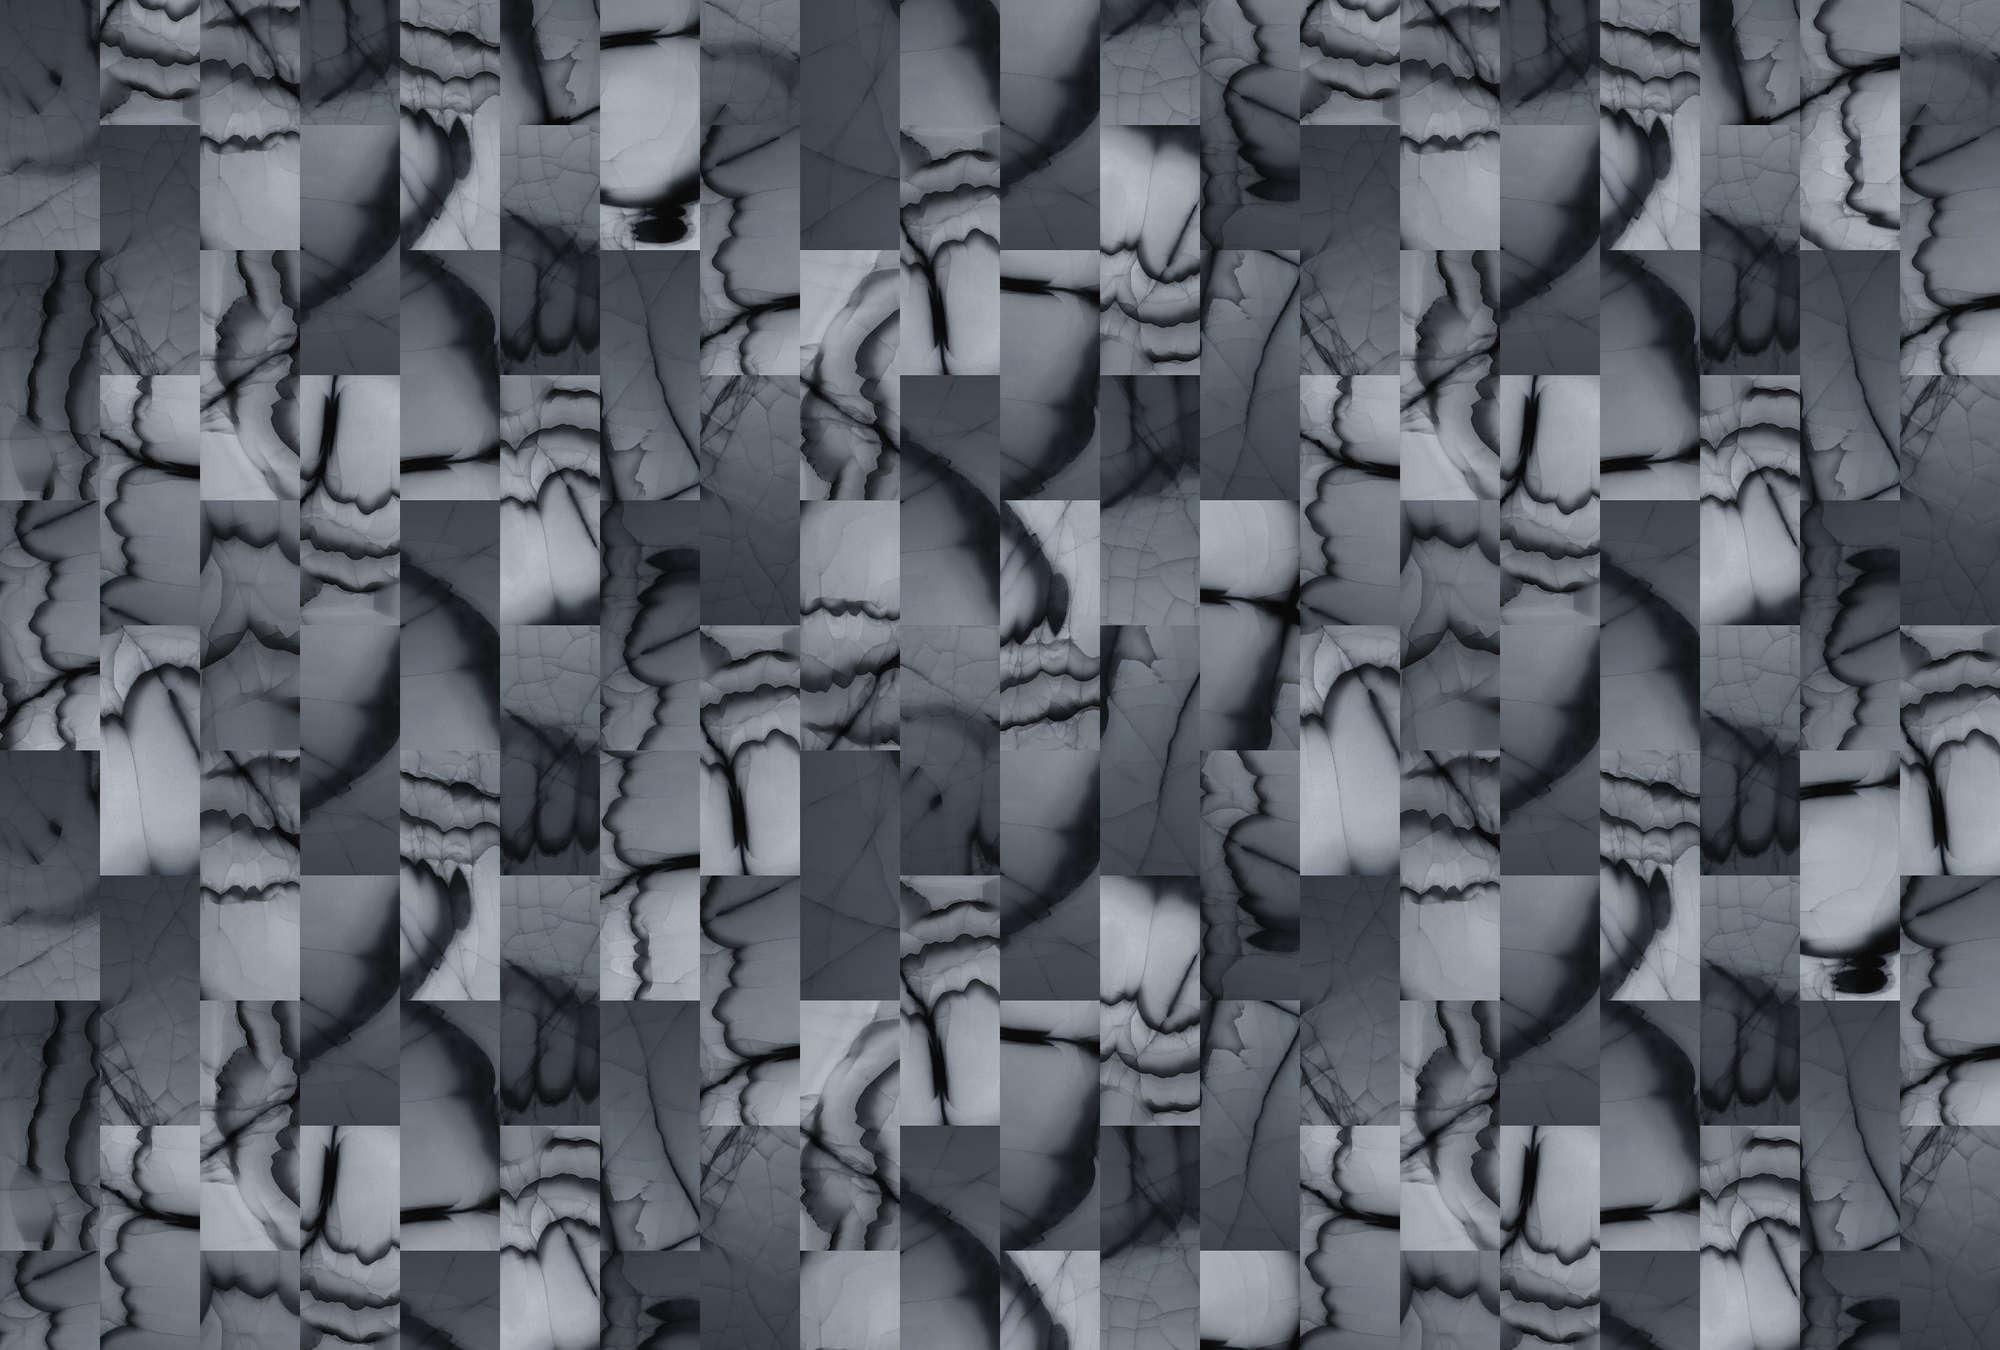             Cut stone 2 - Photo wallpaper with stone look abstract - Blue, Grey | Matt smooth fleece
        